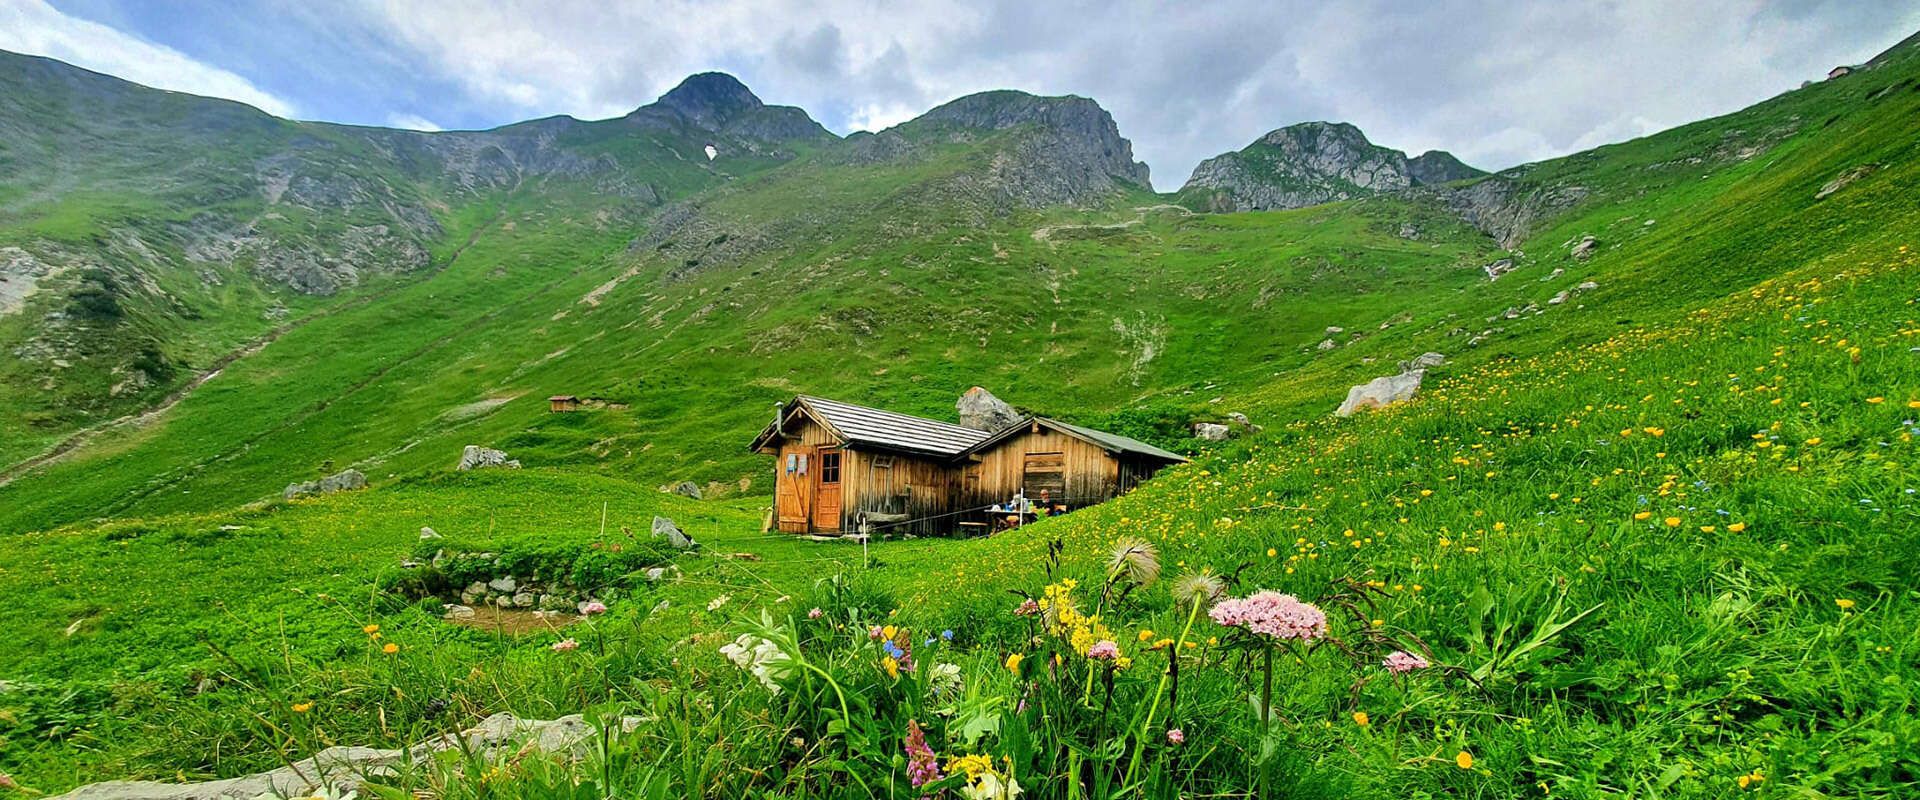 Hut on the Arlberg in Tyrol